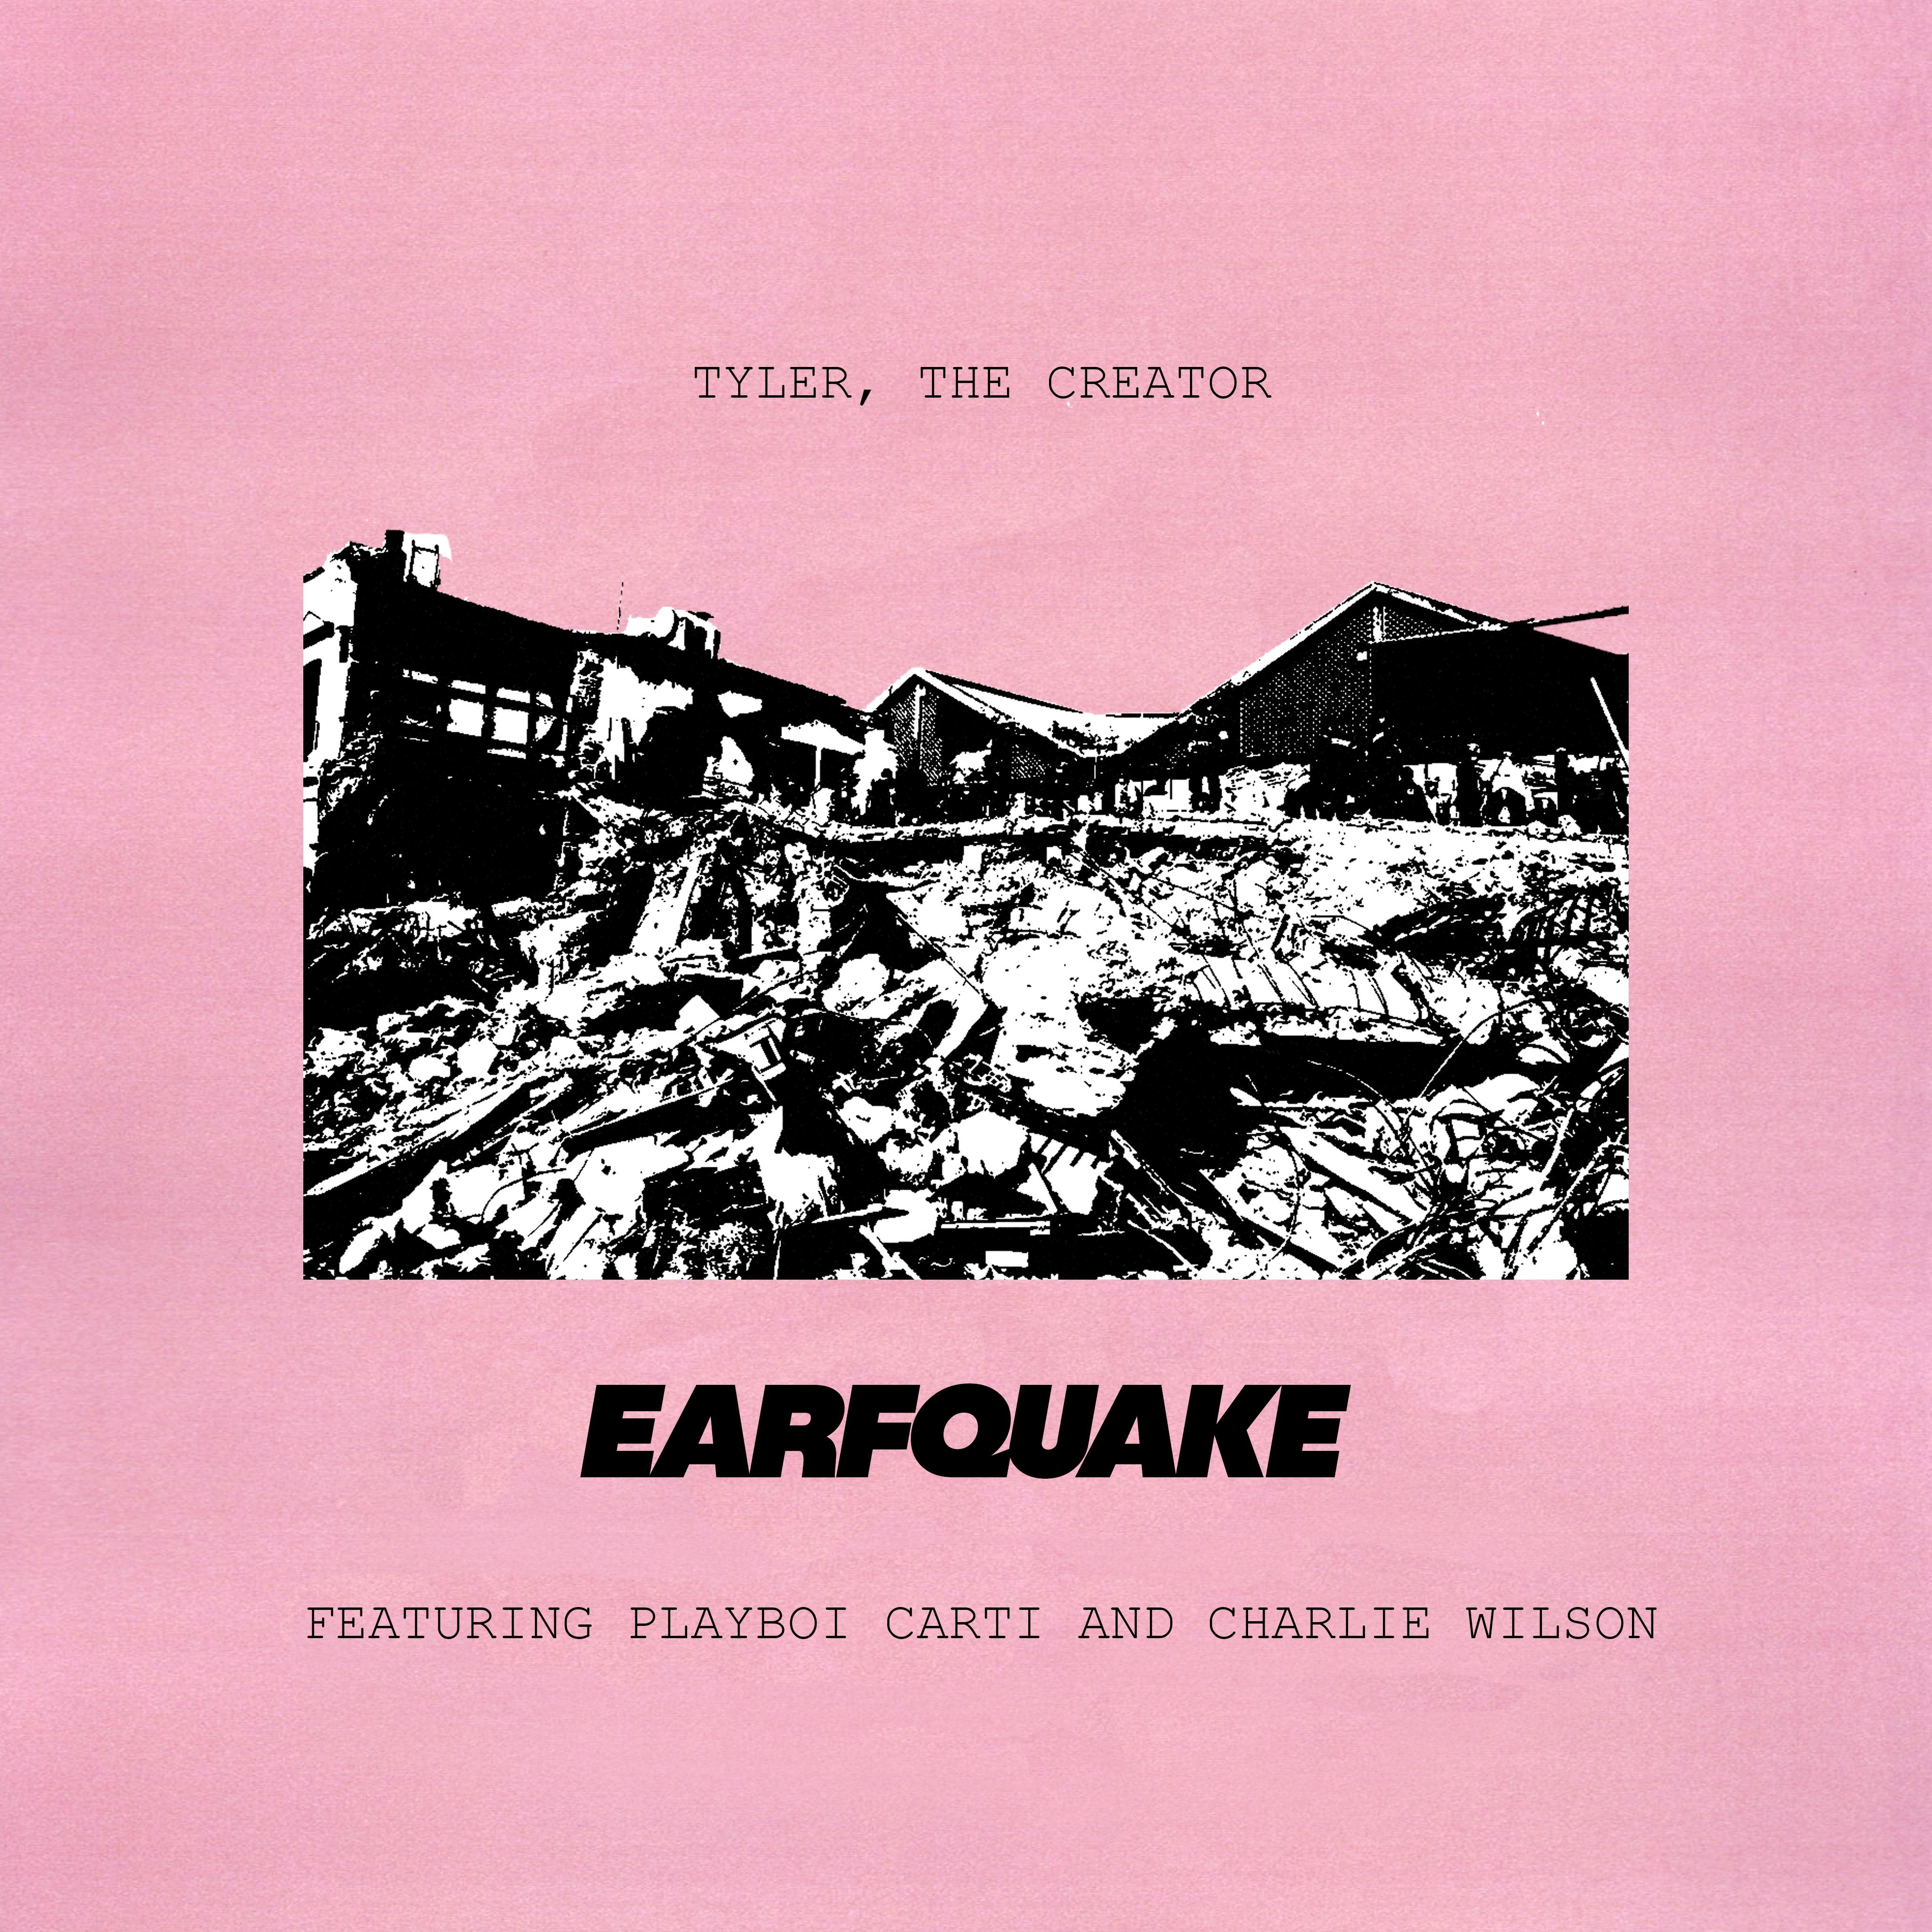 Tyler, the Creator - Earfquake Artwork (1 of 2) | Last.fm